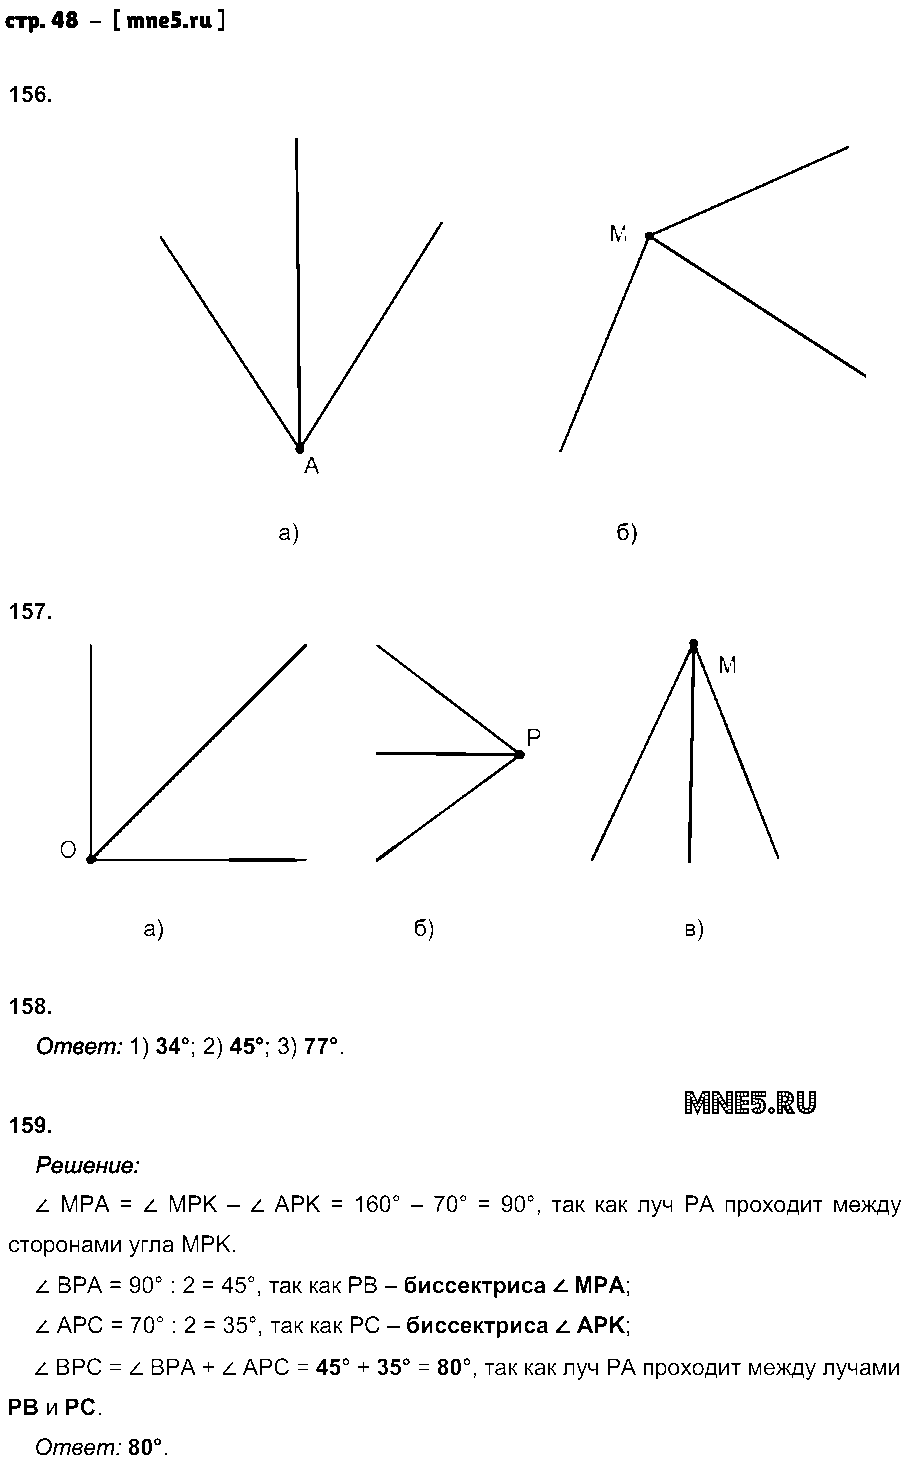 ГДЗ Геометрия 7 класс - стр. 48